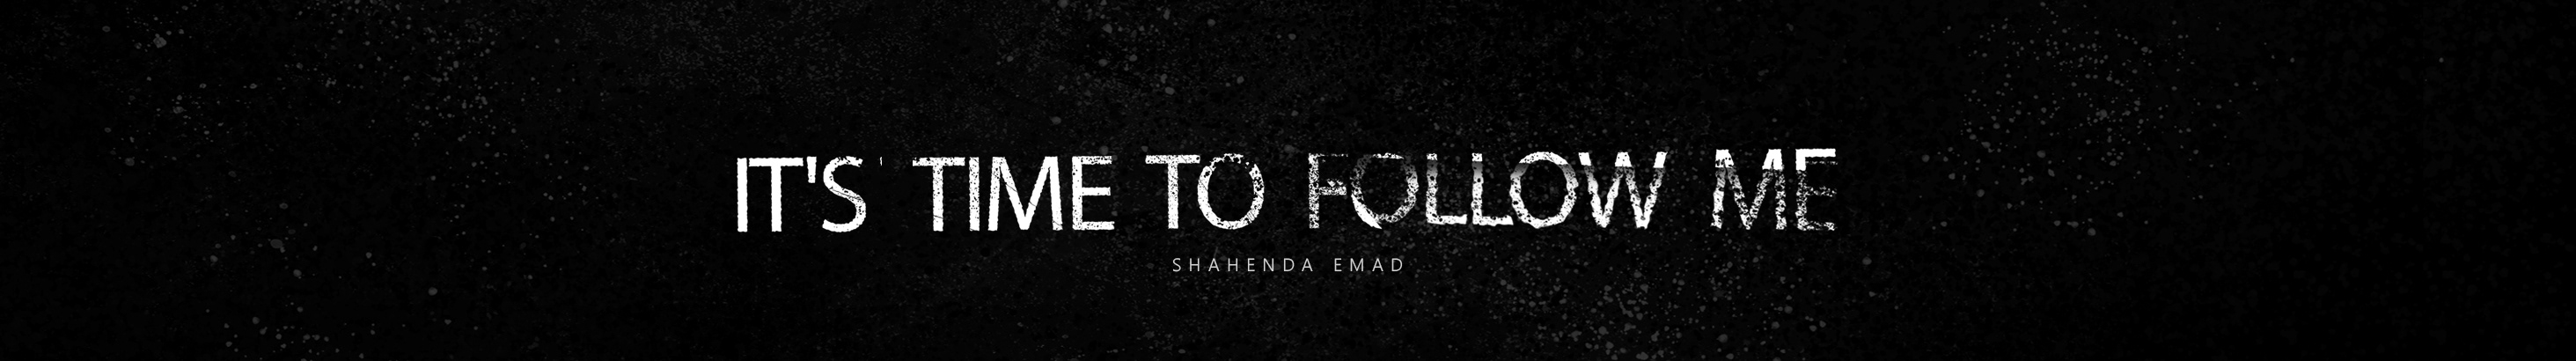 Banner de perfil de Shahenda Emad El-deen